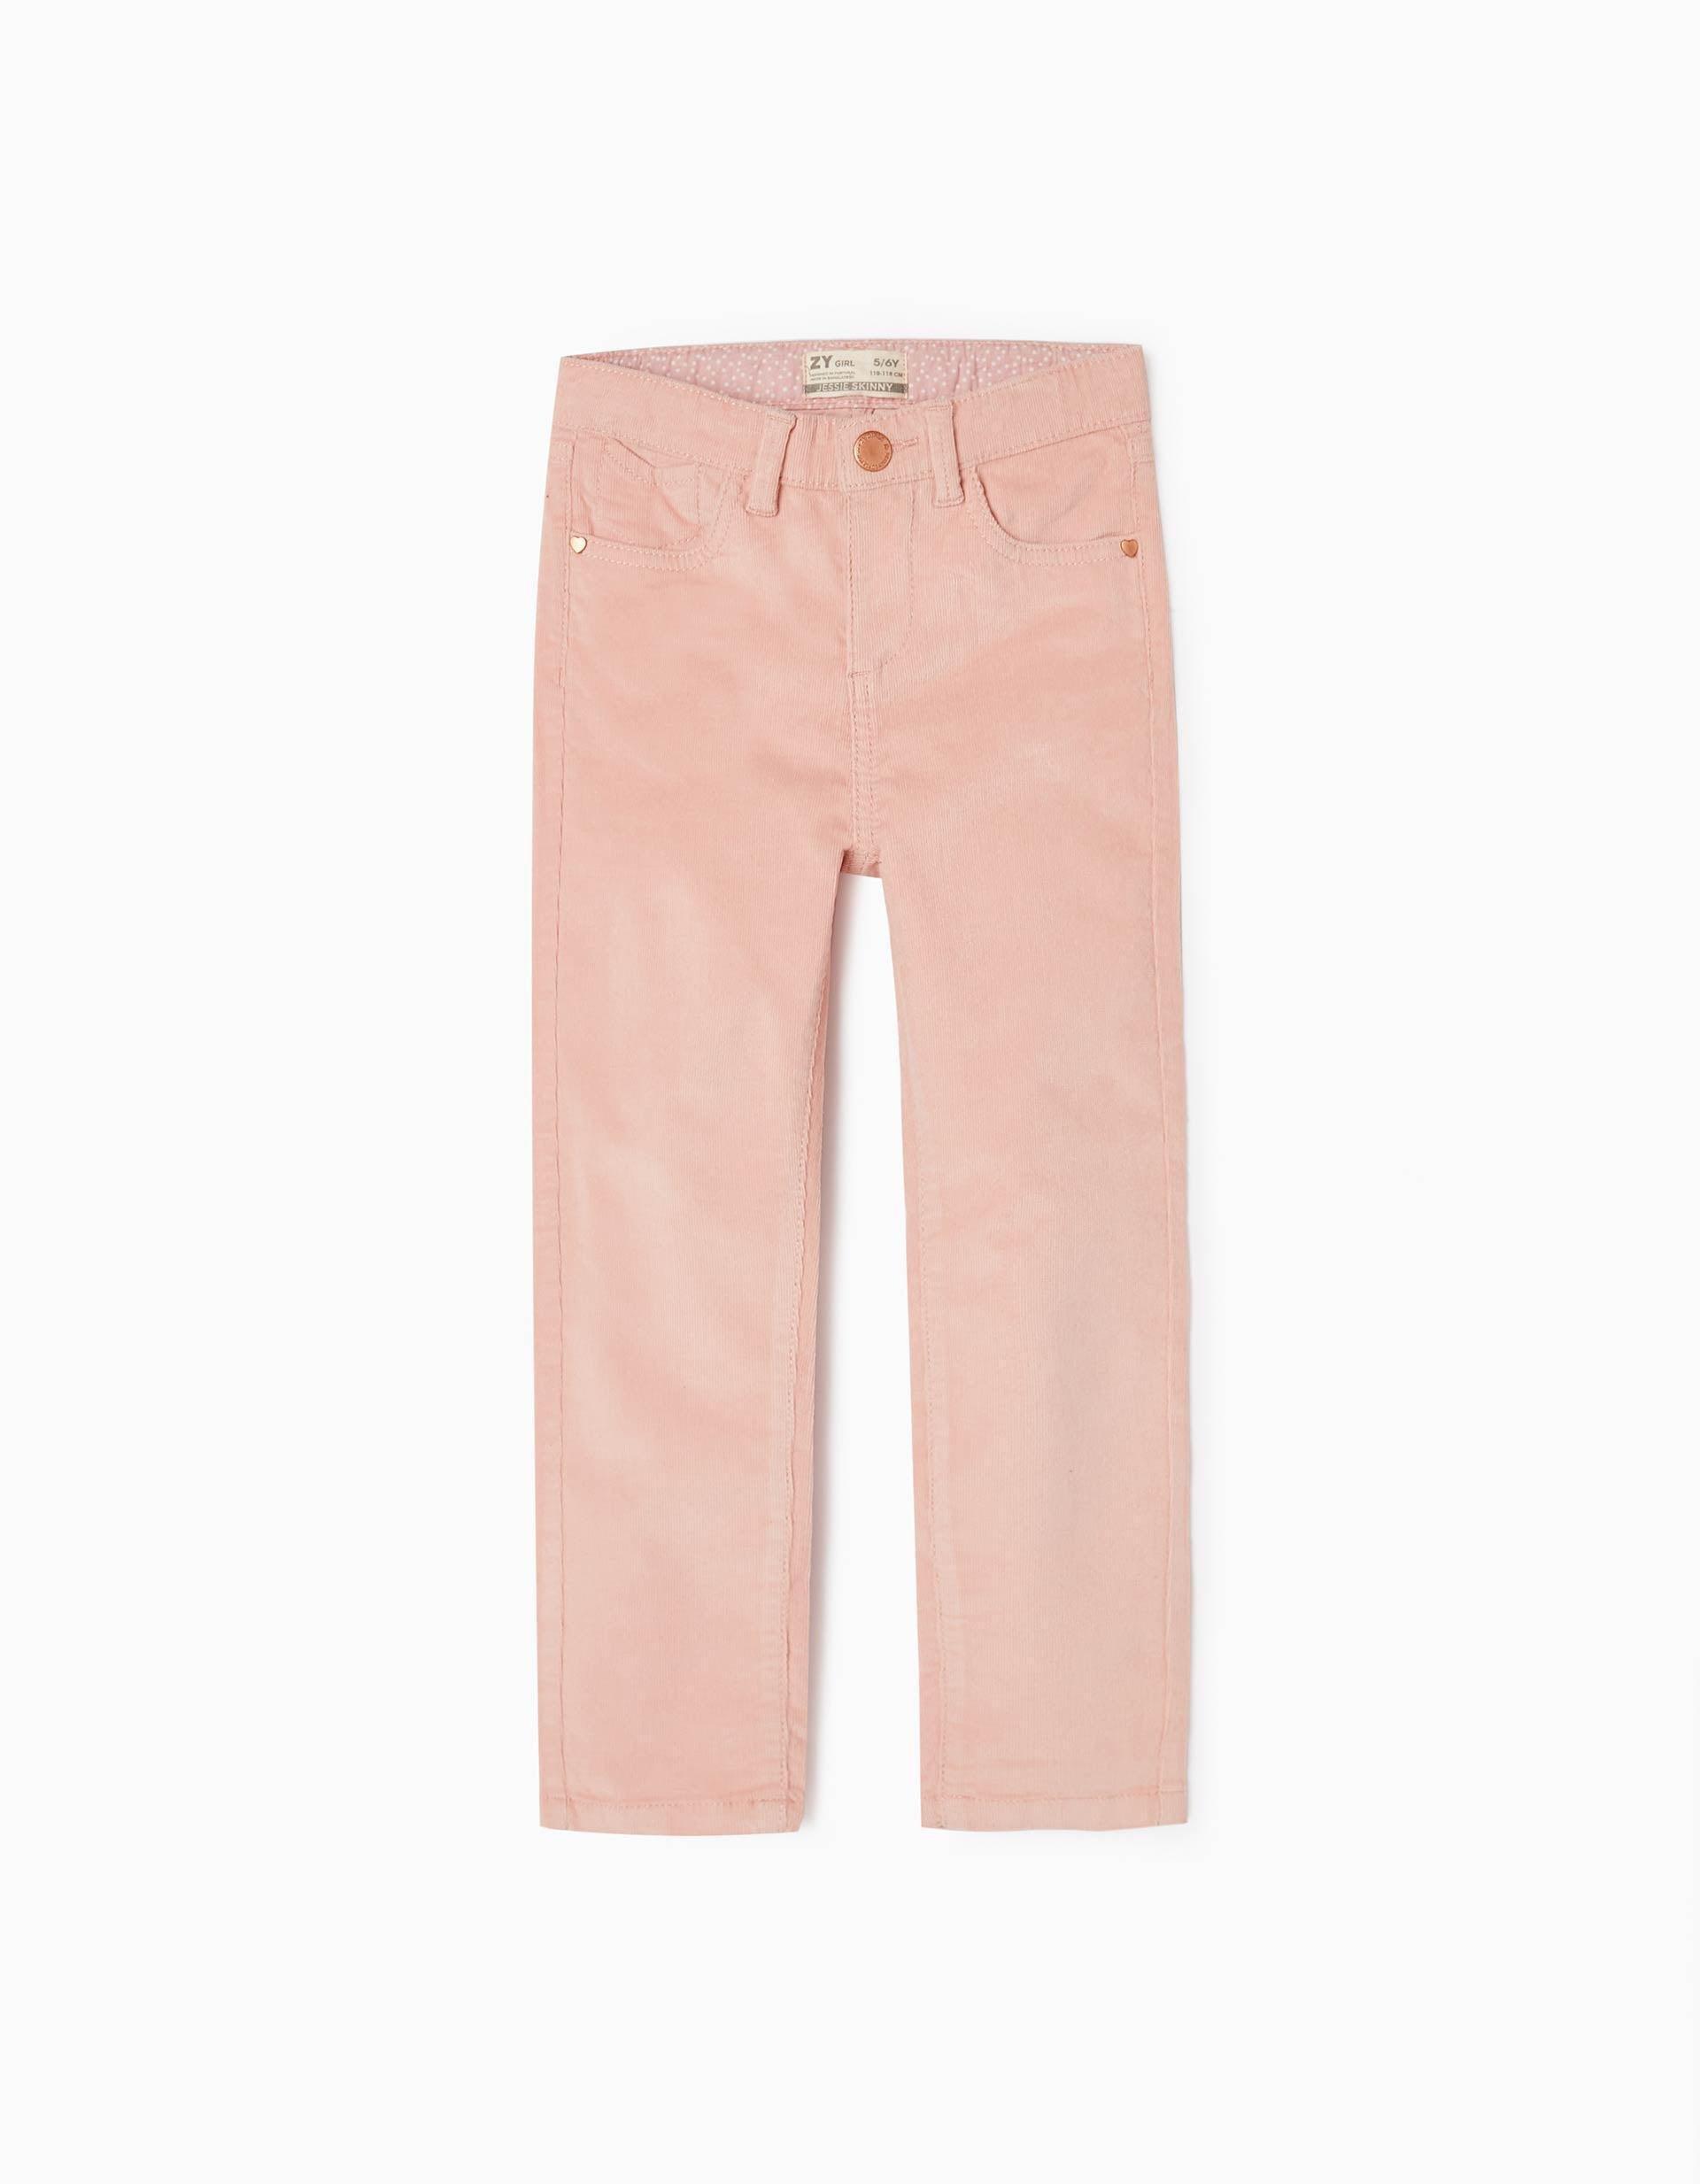 Zippy - Pink Cotton Corduroy Trousers, Kids Girls